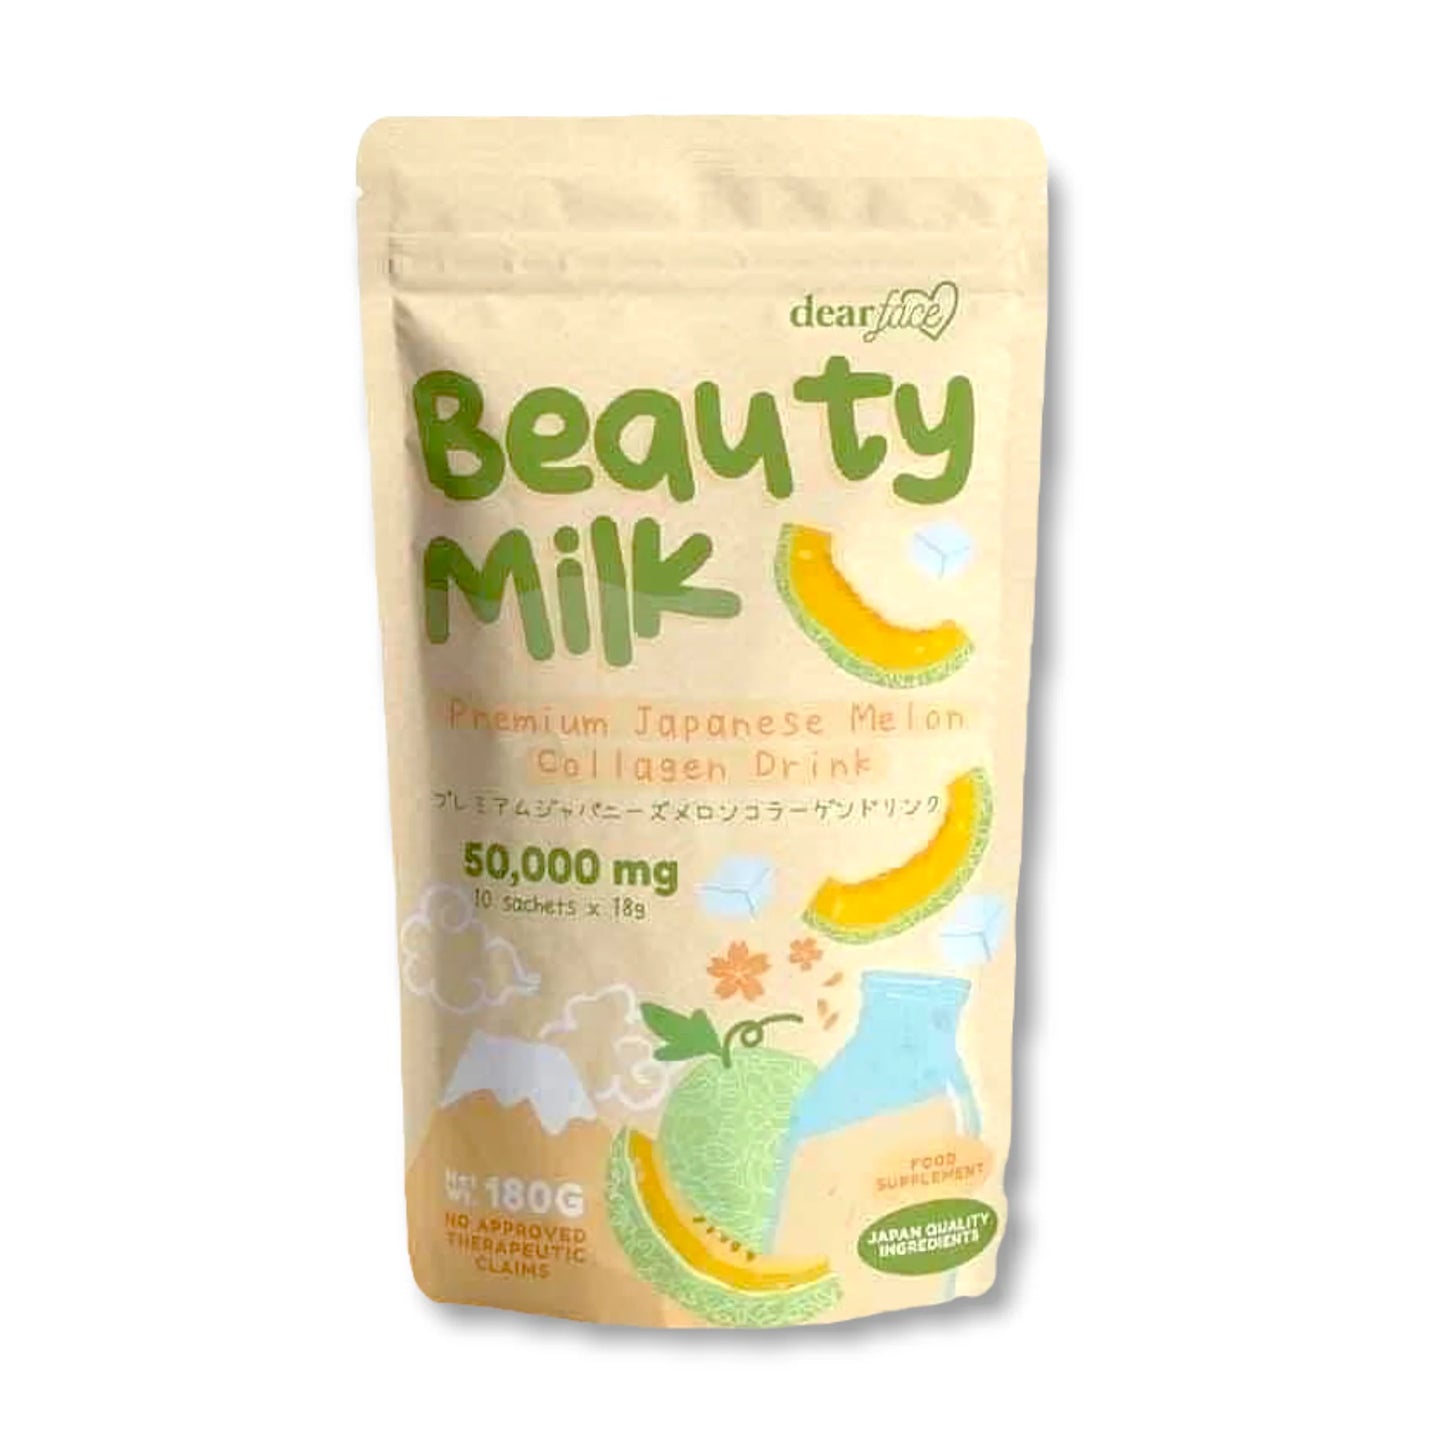 Beauty Milk Premium Japanese Melon Collagen Drink 50,000mg | 10 sachets x 18g